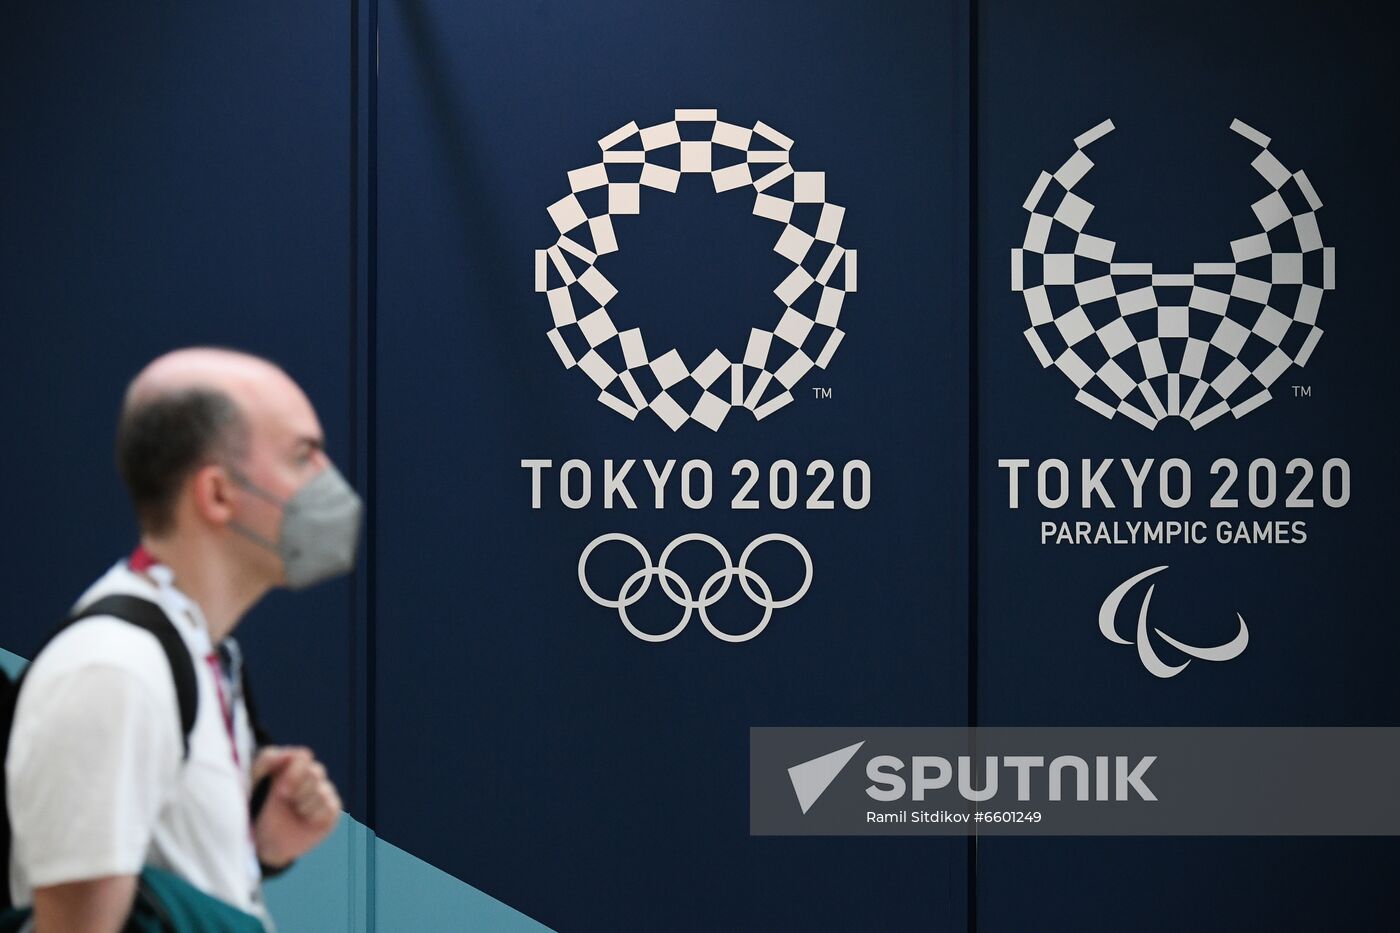 Japan Olympics 2020 Main Press Center